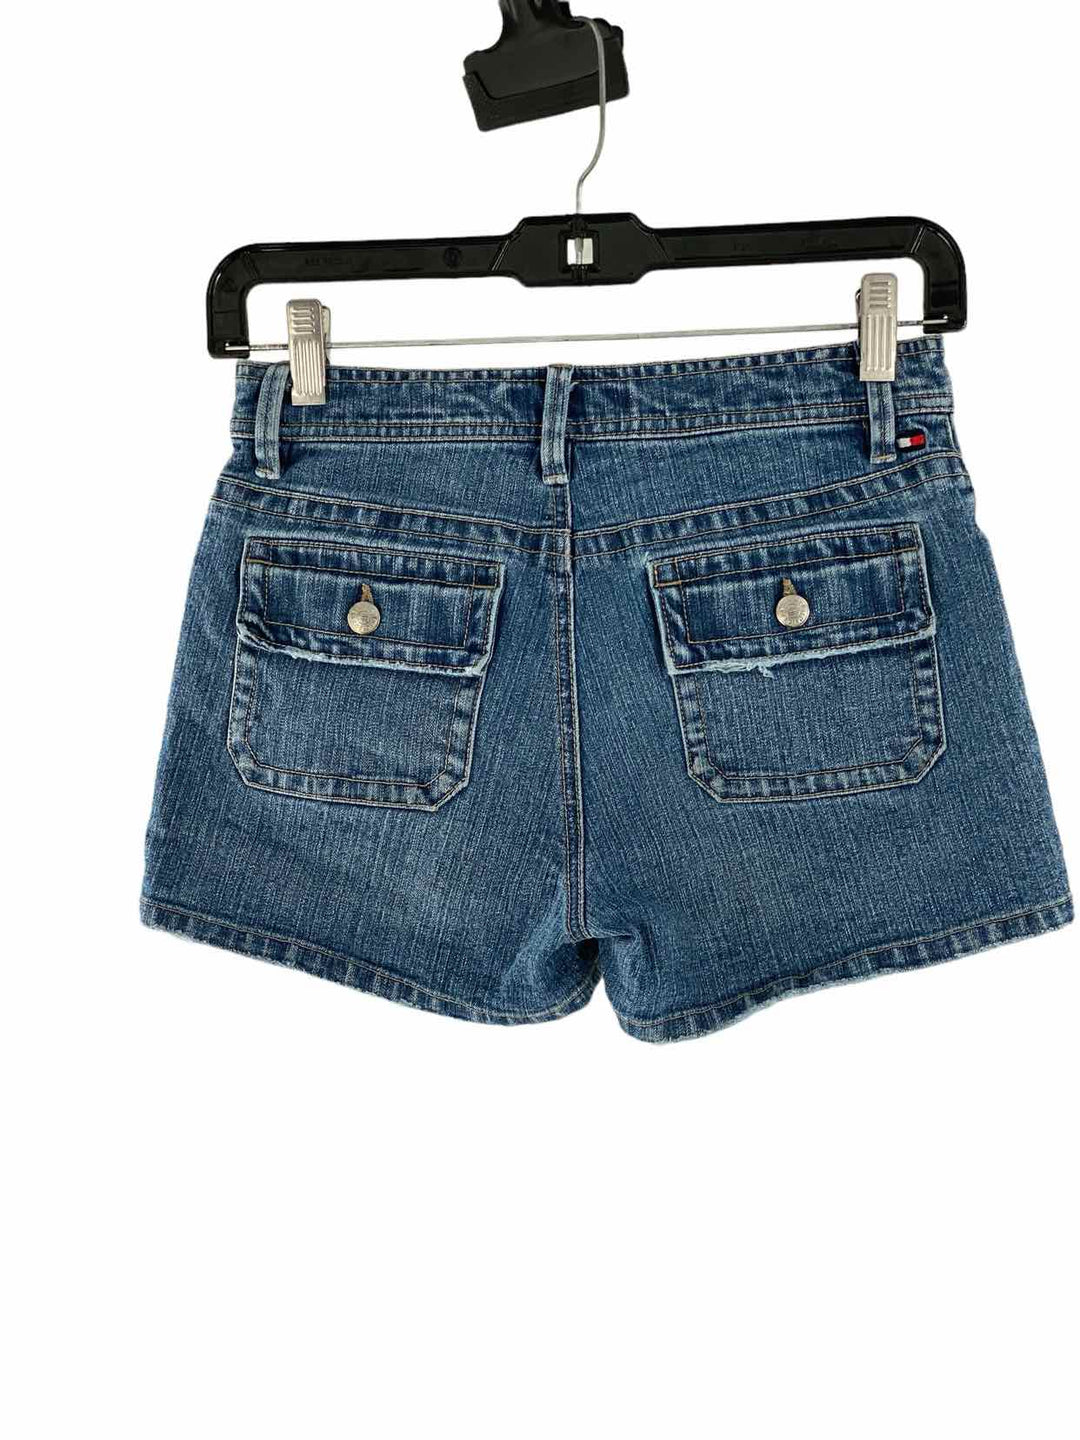 Tommy Hilfiger Size 14 Blue Denim Shorts